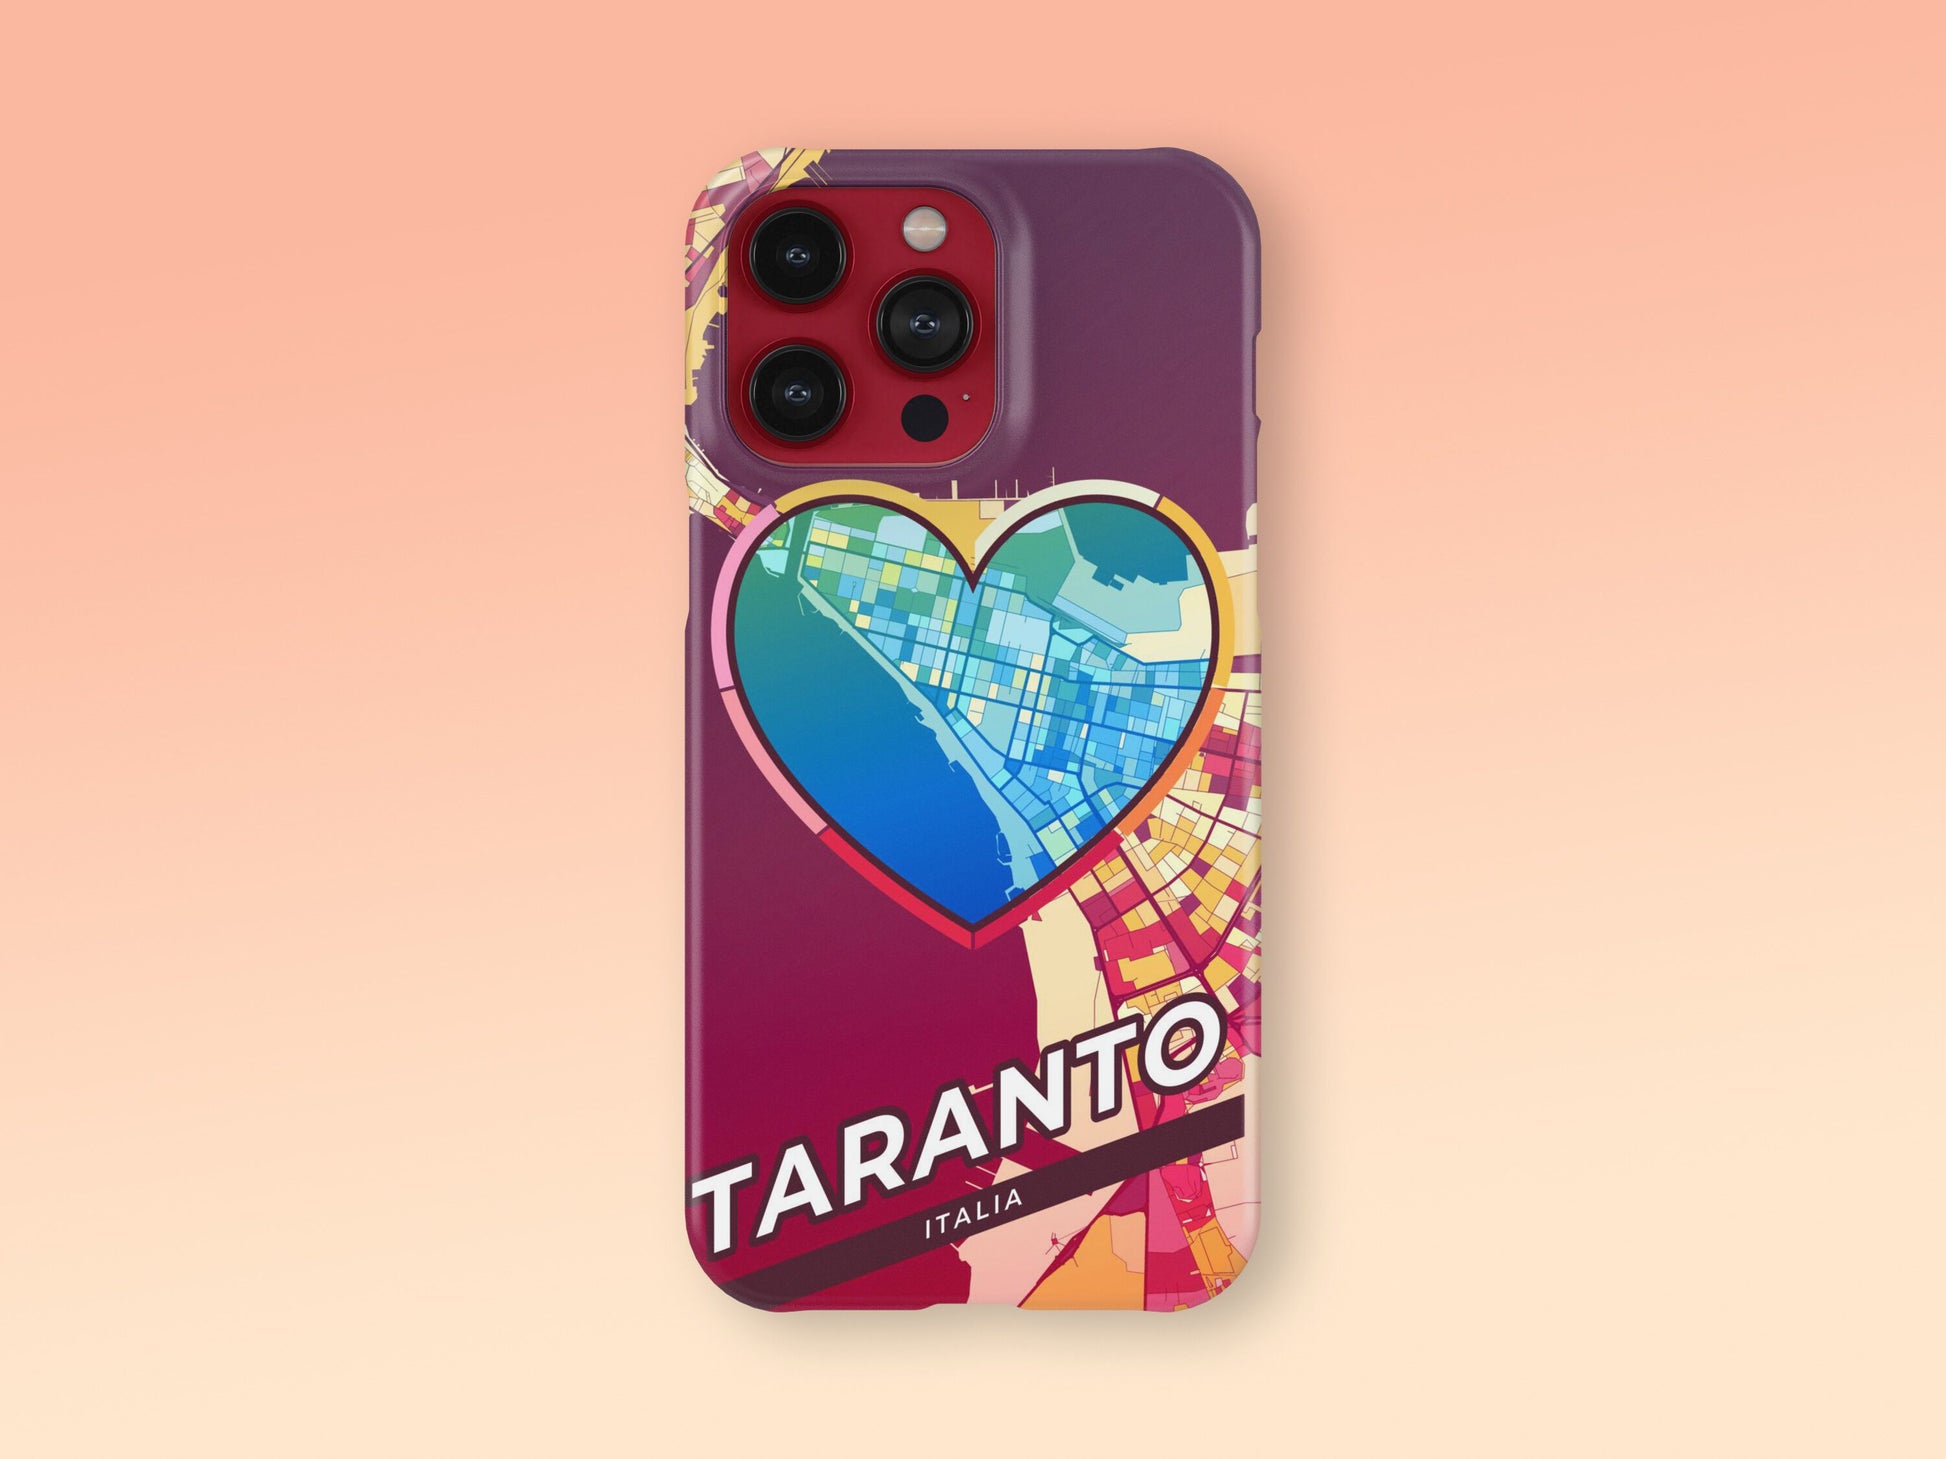 Taranto Italy slim phone case with colorful icon 2